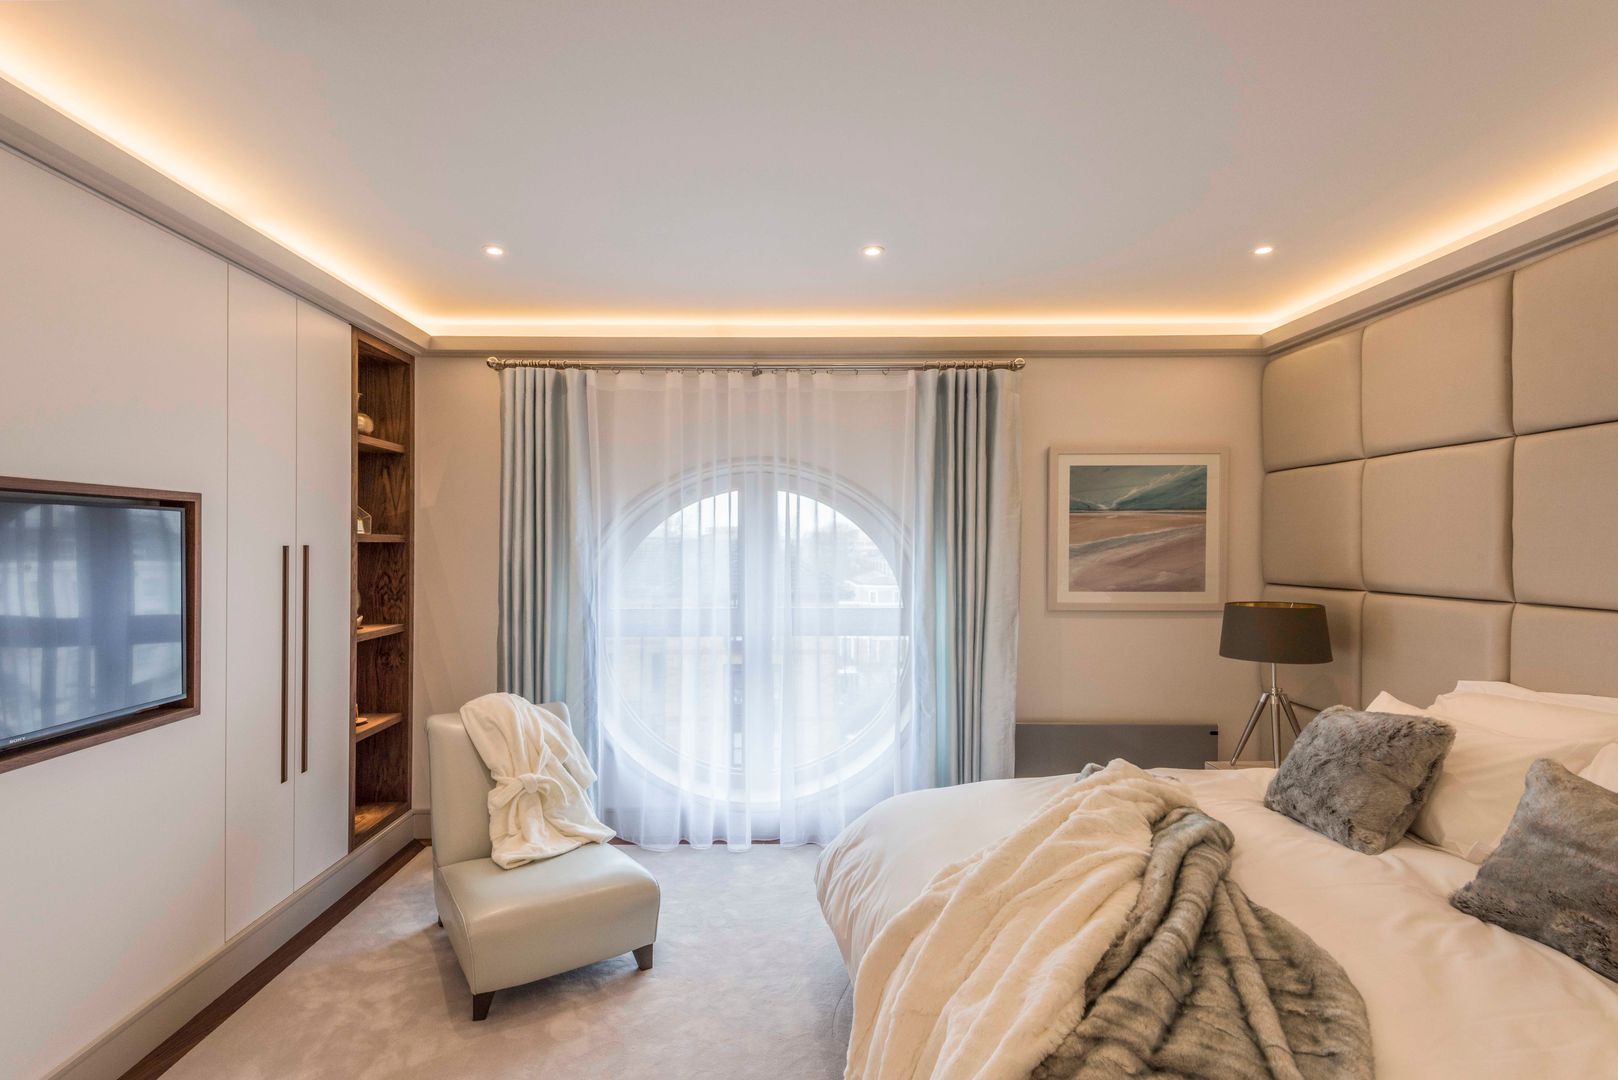 Bedroom Prestige Architects By Marco Braghiroli モダンスタイルの寝室 bespoke,Bedroom,bedroom,lighting